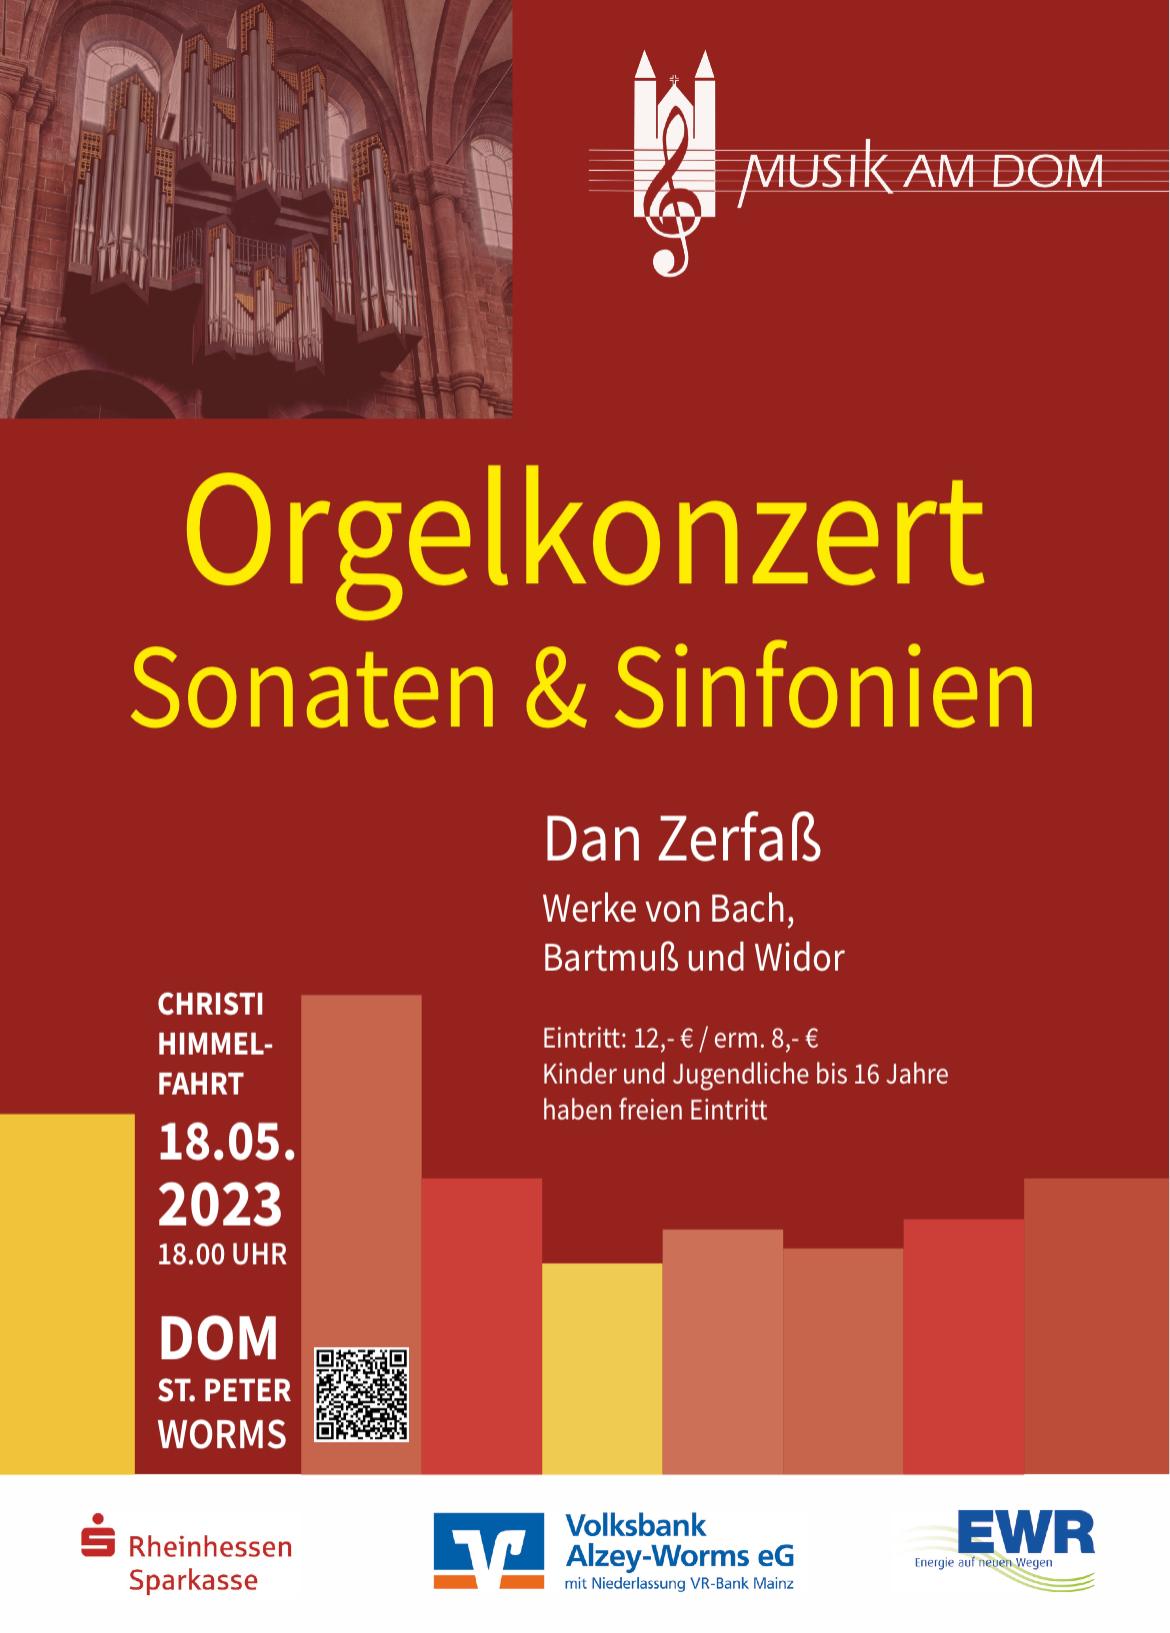 Orgelkonzert Dan Zerfaß